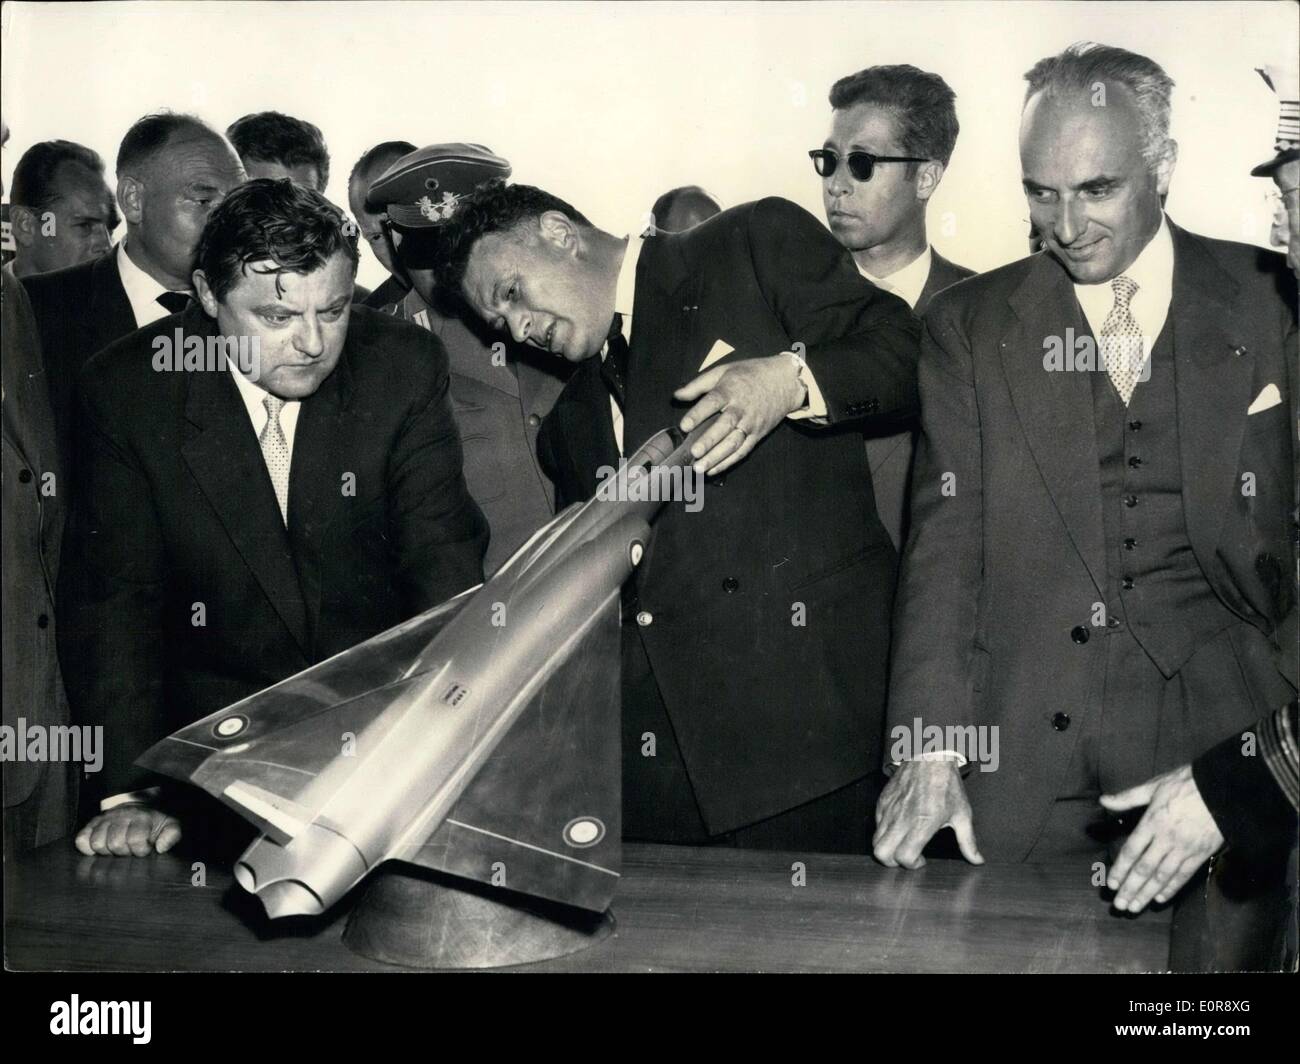 Lug. 08, 1958 - Ingegnere Dassault, Franz Josef Strauss e Guillaumat a Parigi . Foto Stock